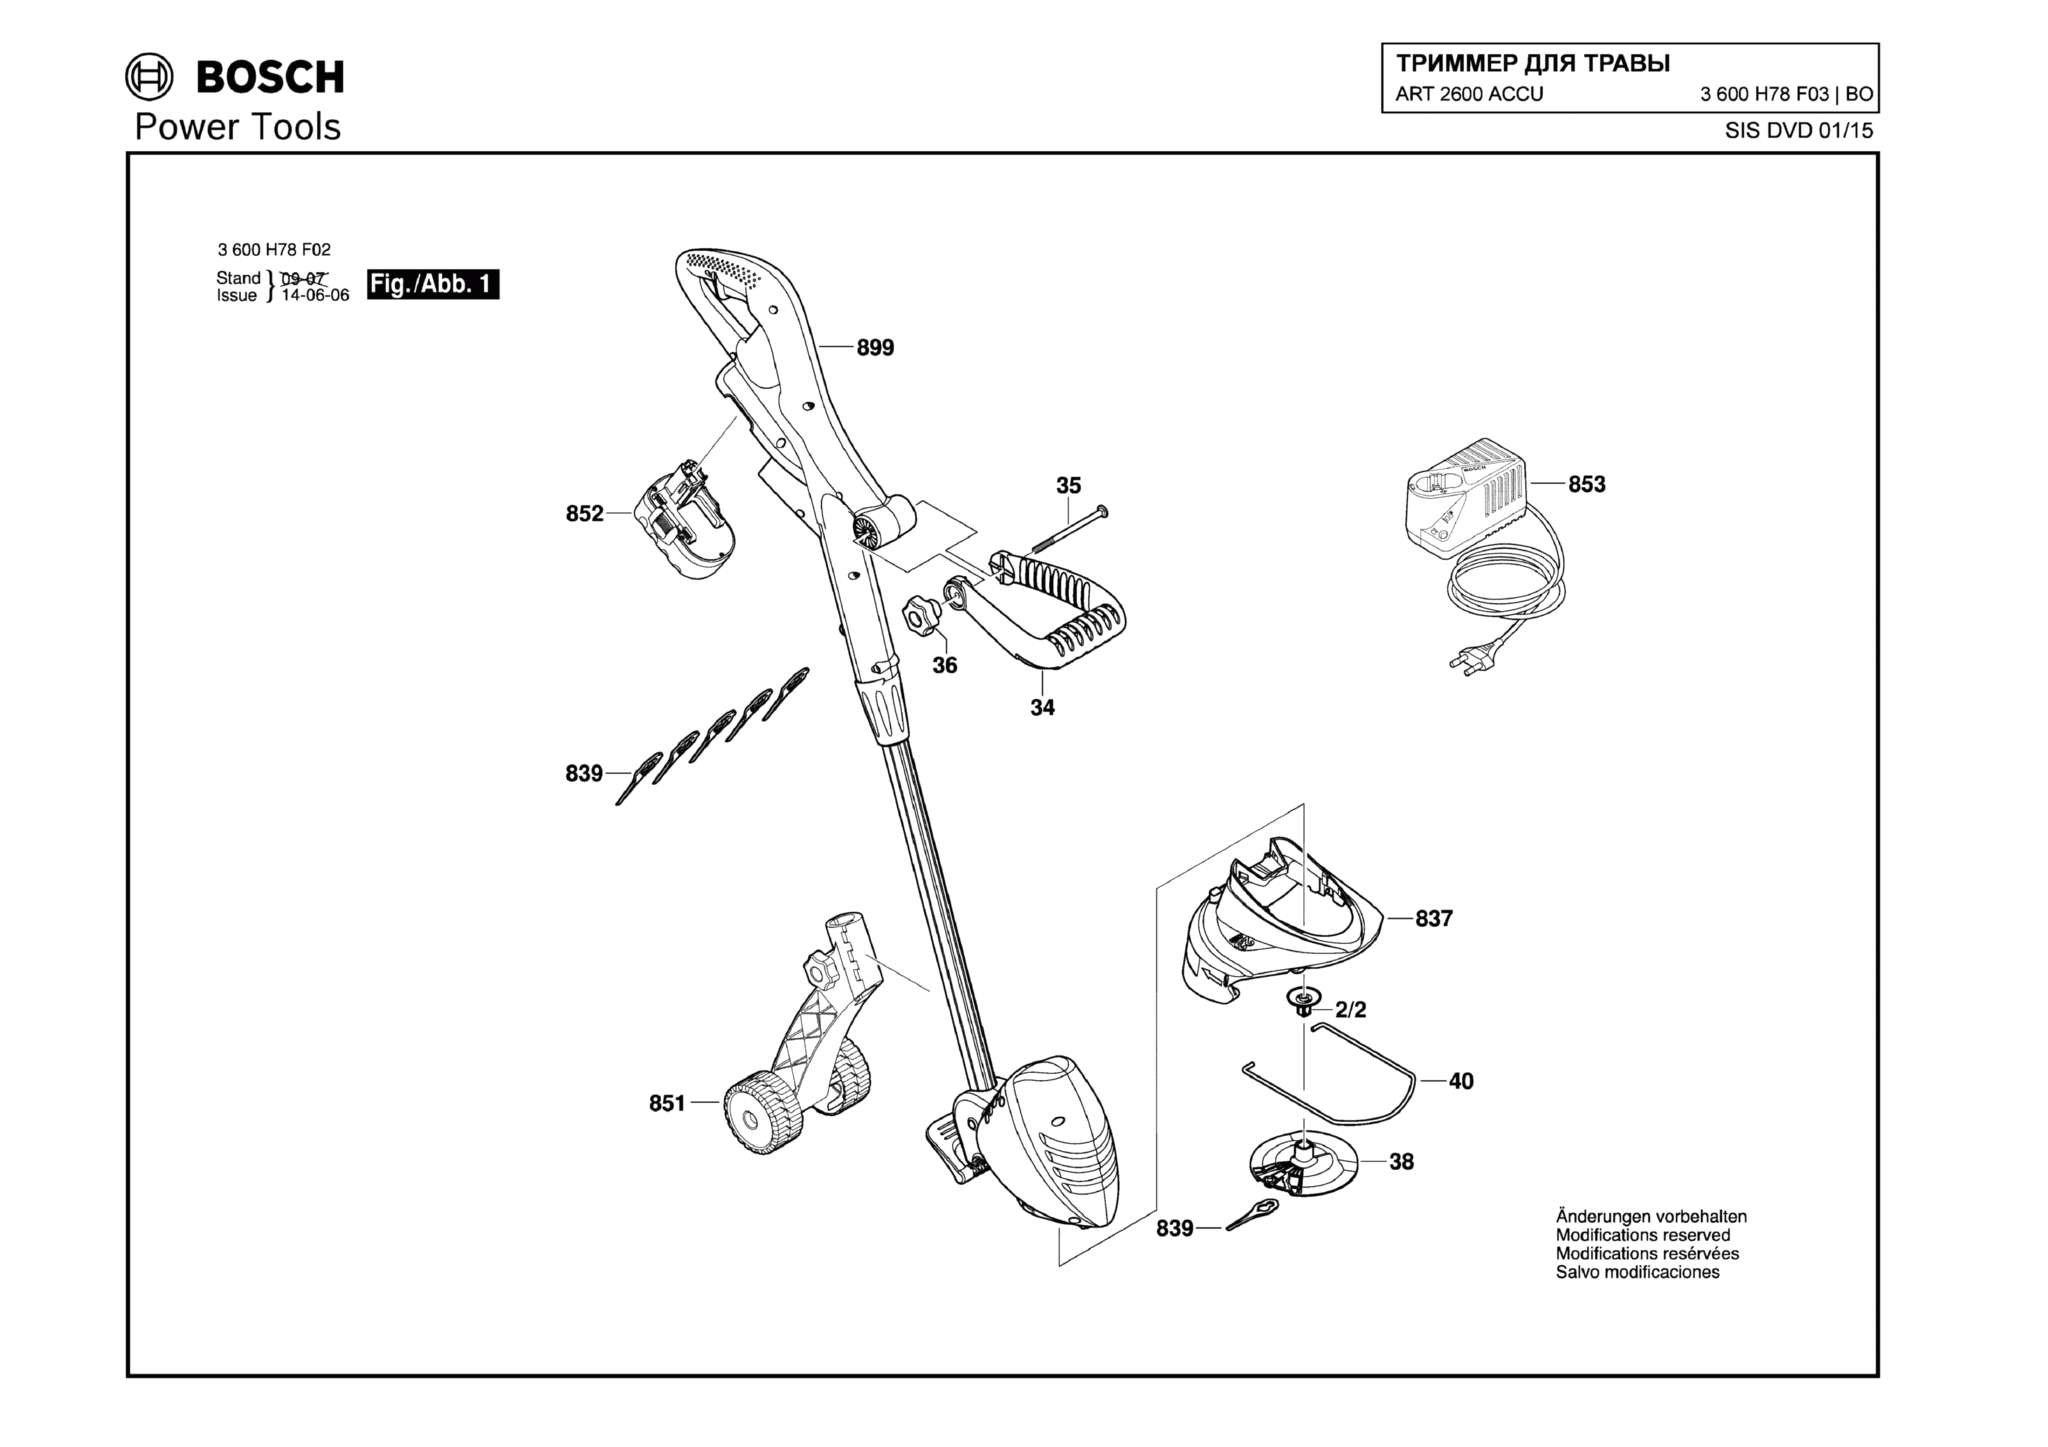 Запчасти, схема и деталировка Bosch ART 2600 ACCU (ТИП 3600H78F03)